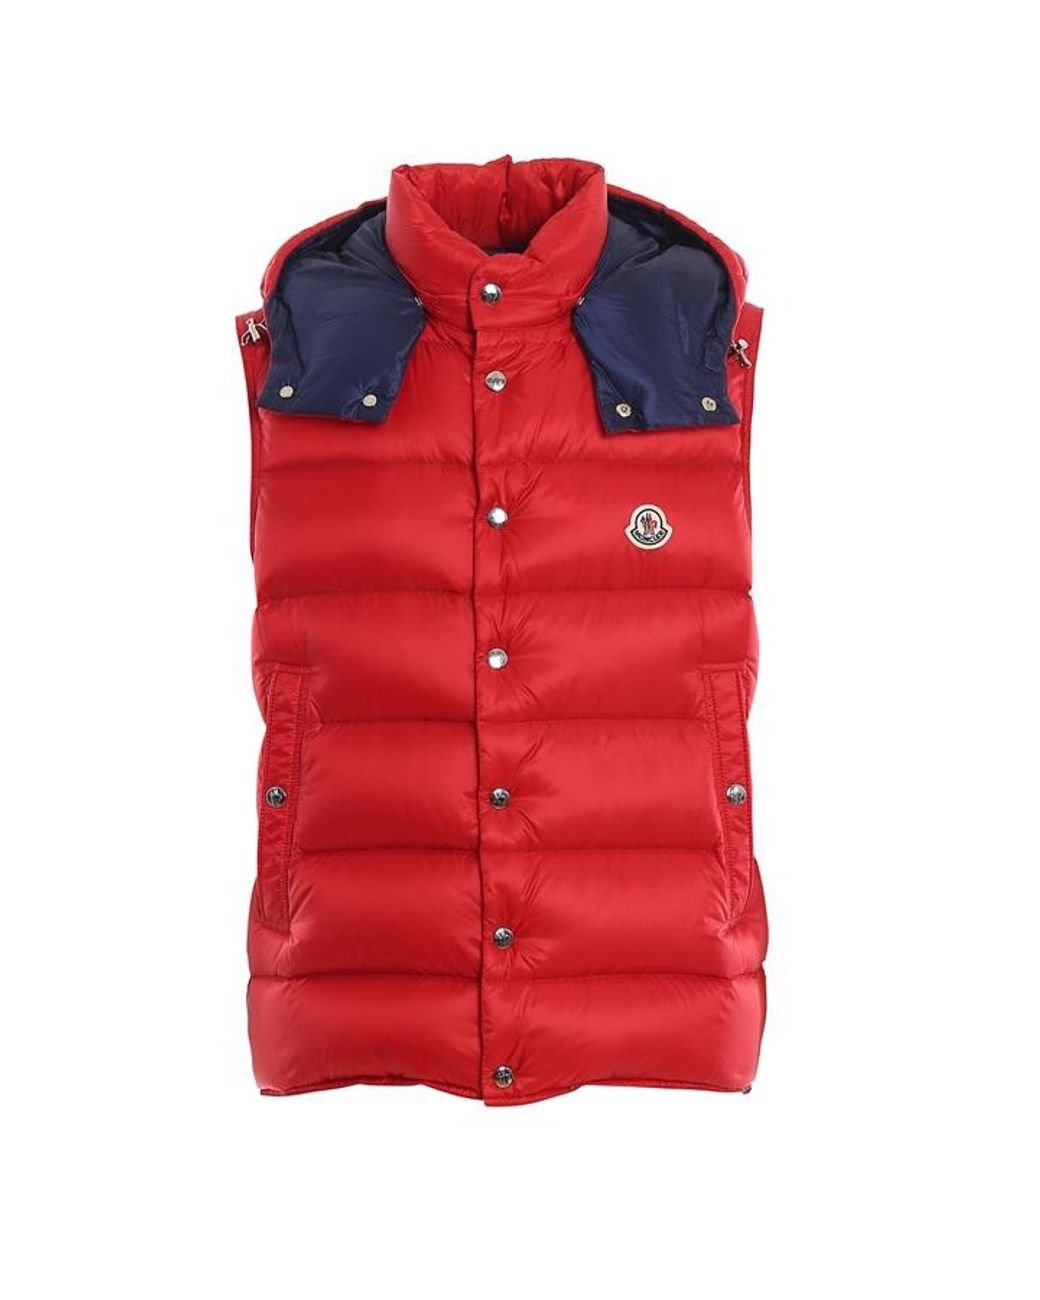 Moncler Synthetic Red Down Billecart Vest for Men - Lyst